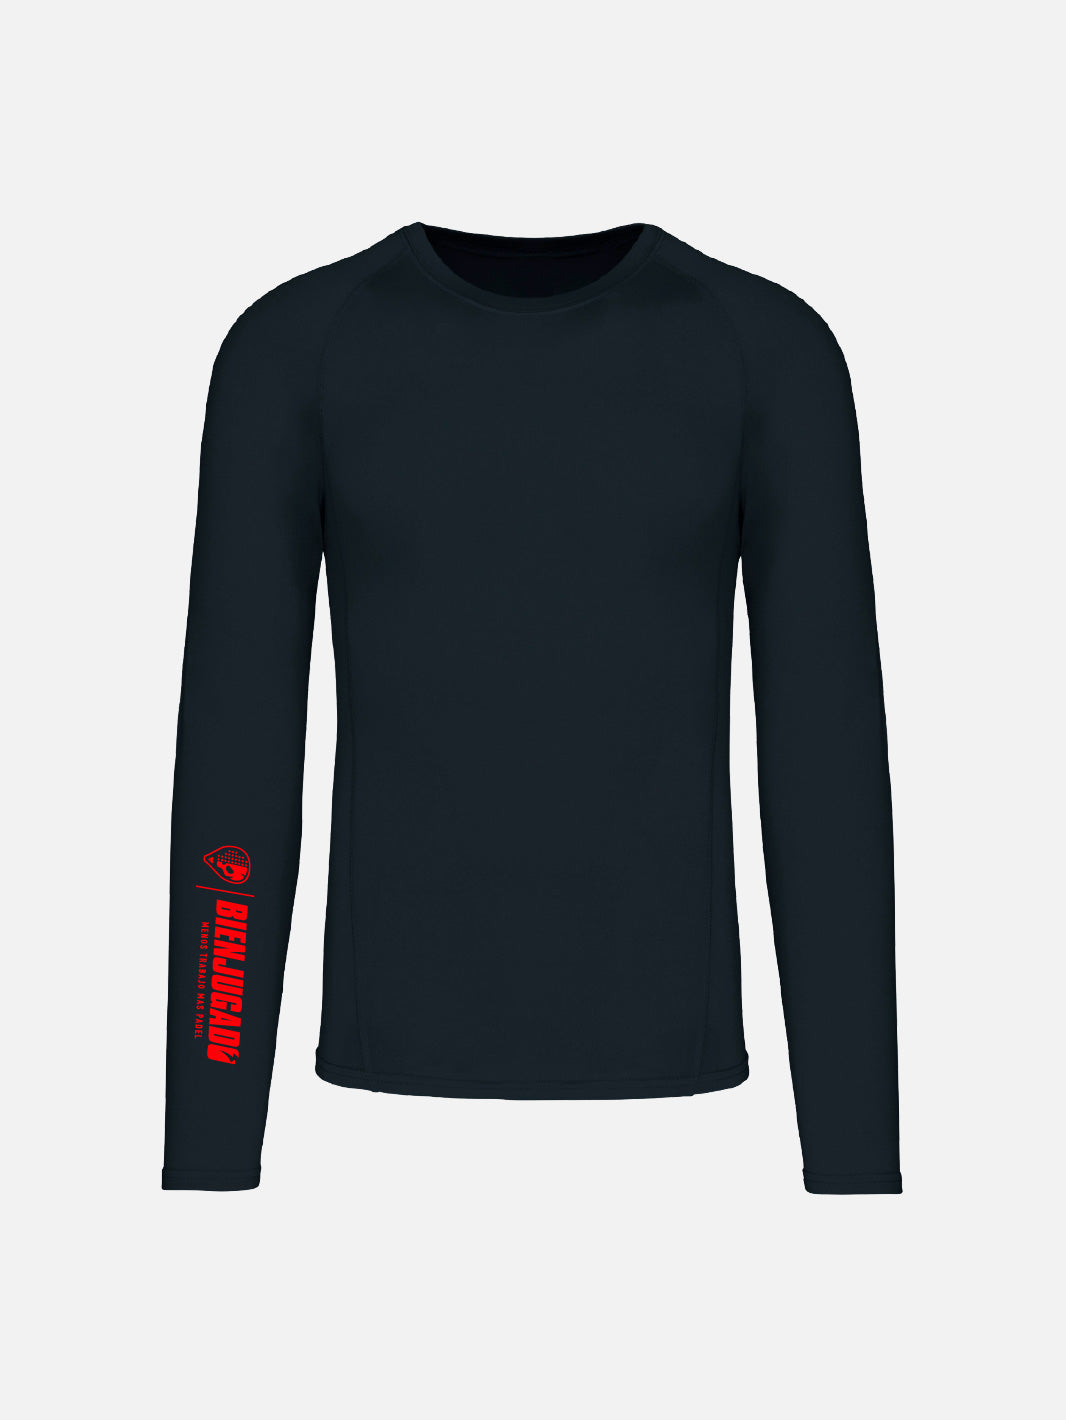 Unisex Thermal Shirt - Black